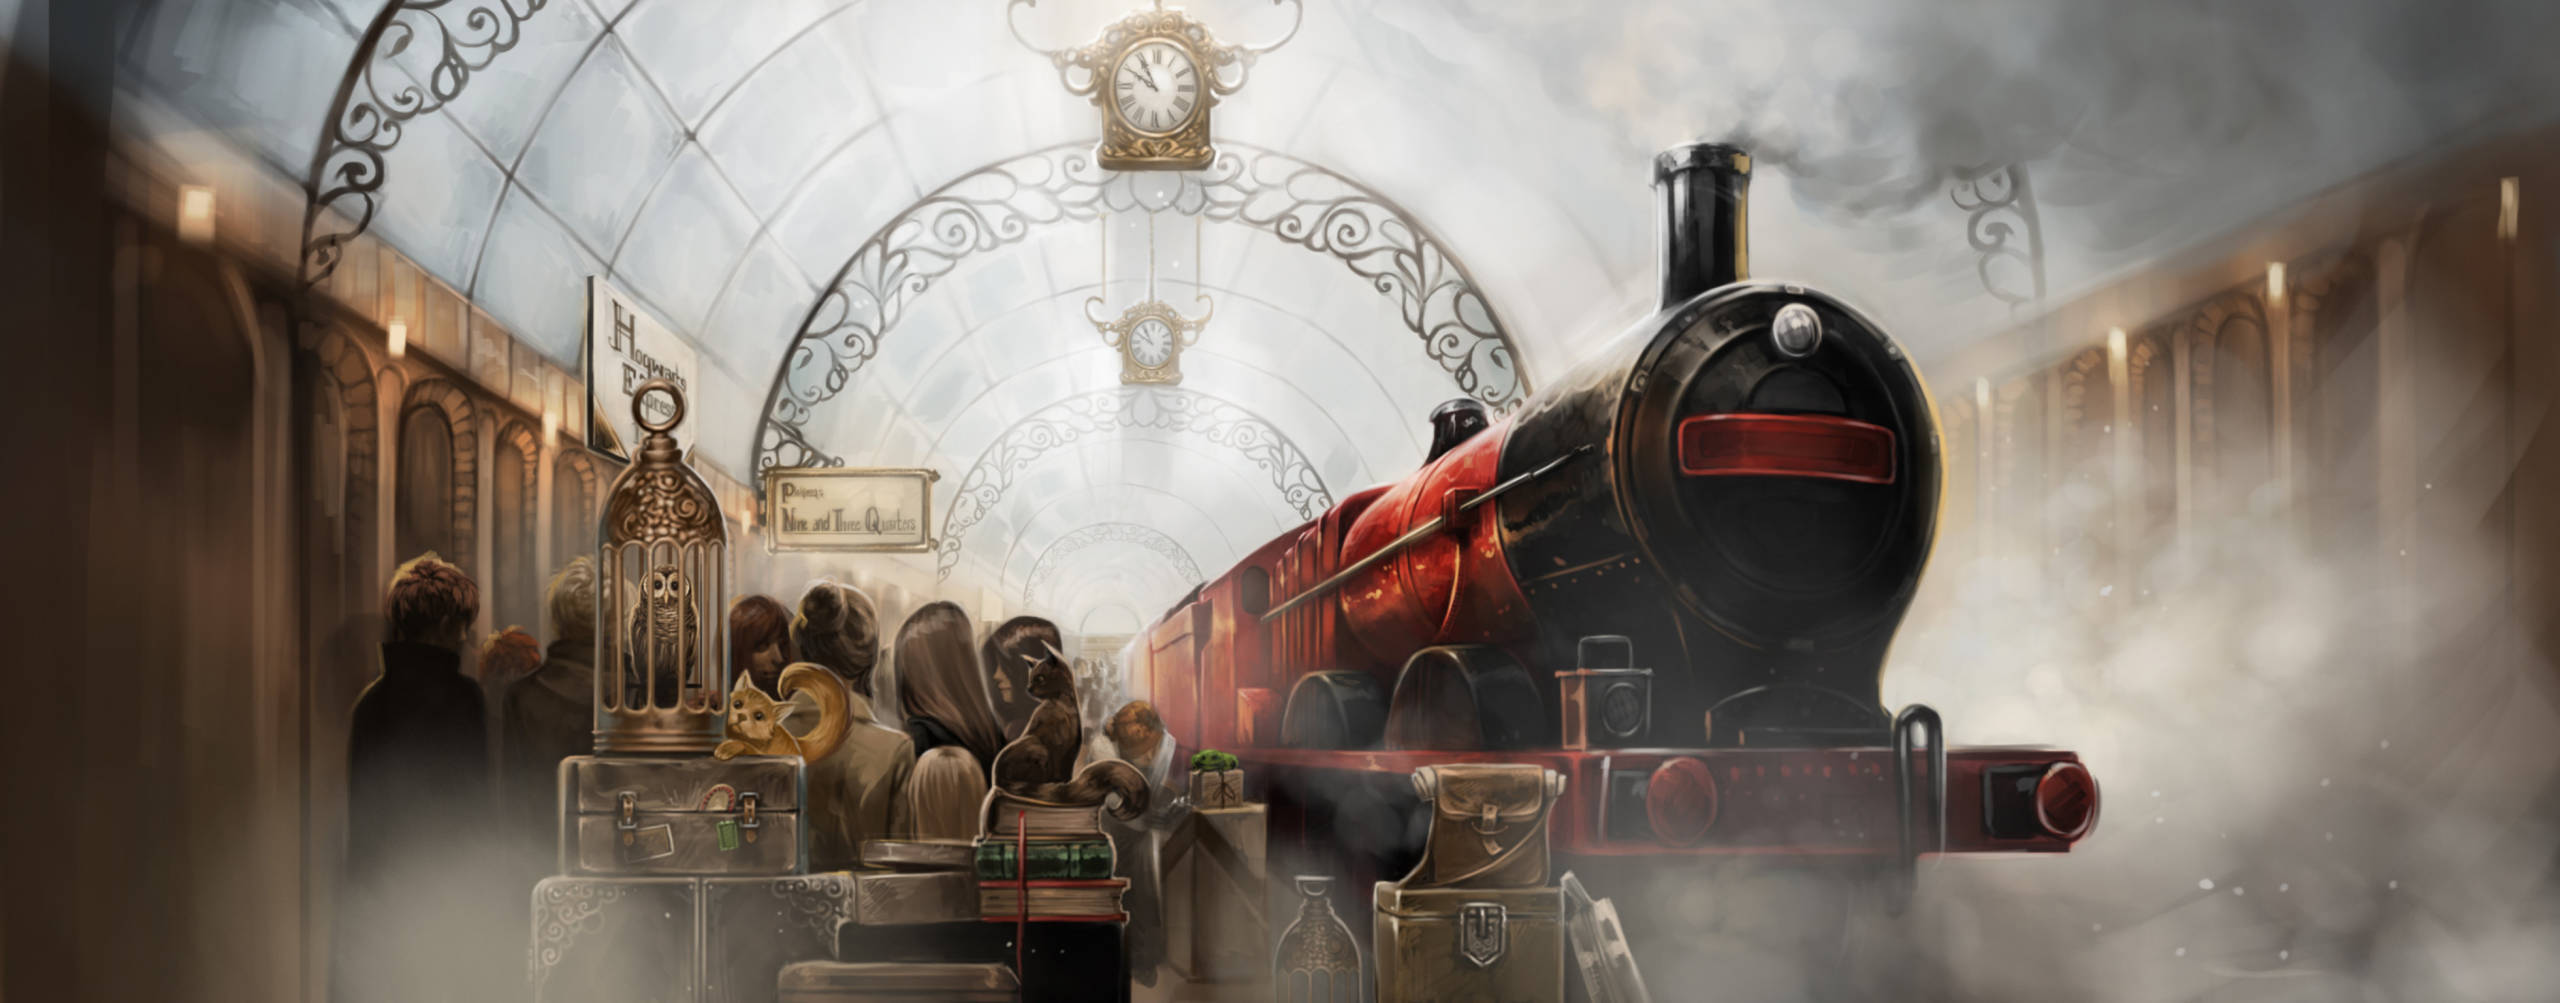 The Hogwarts Express at platform nine and three-quarters.